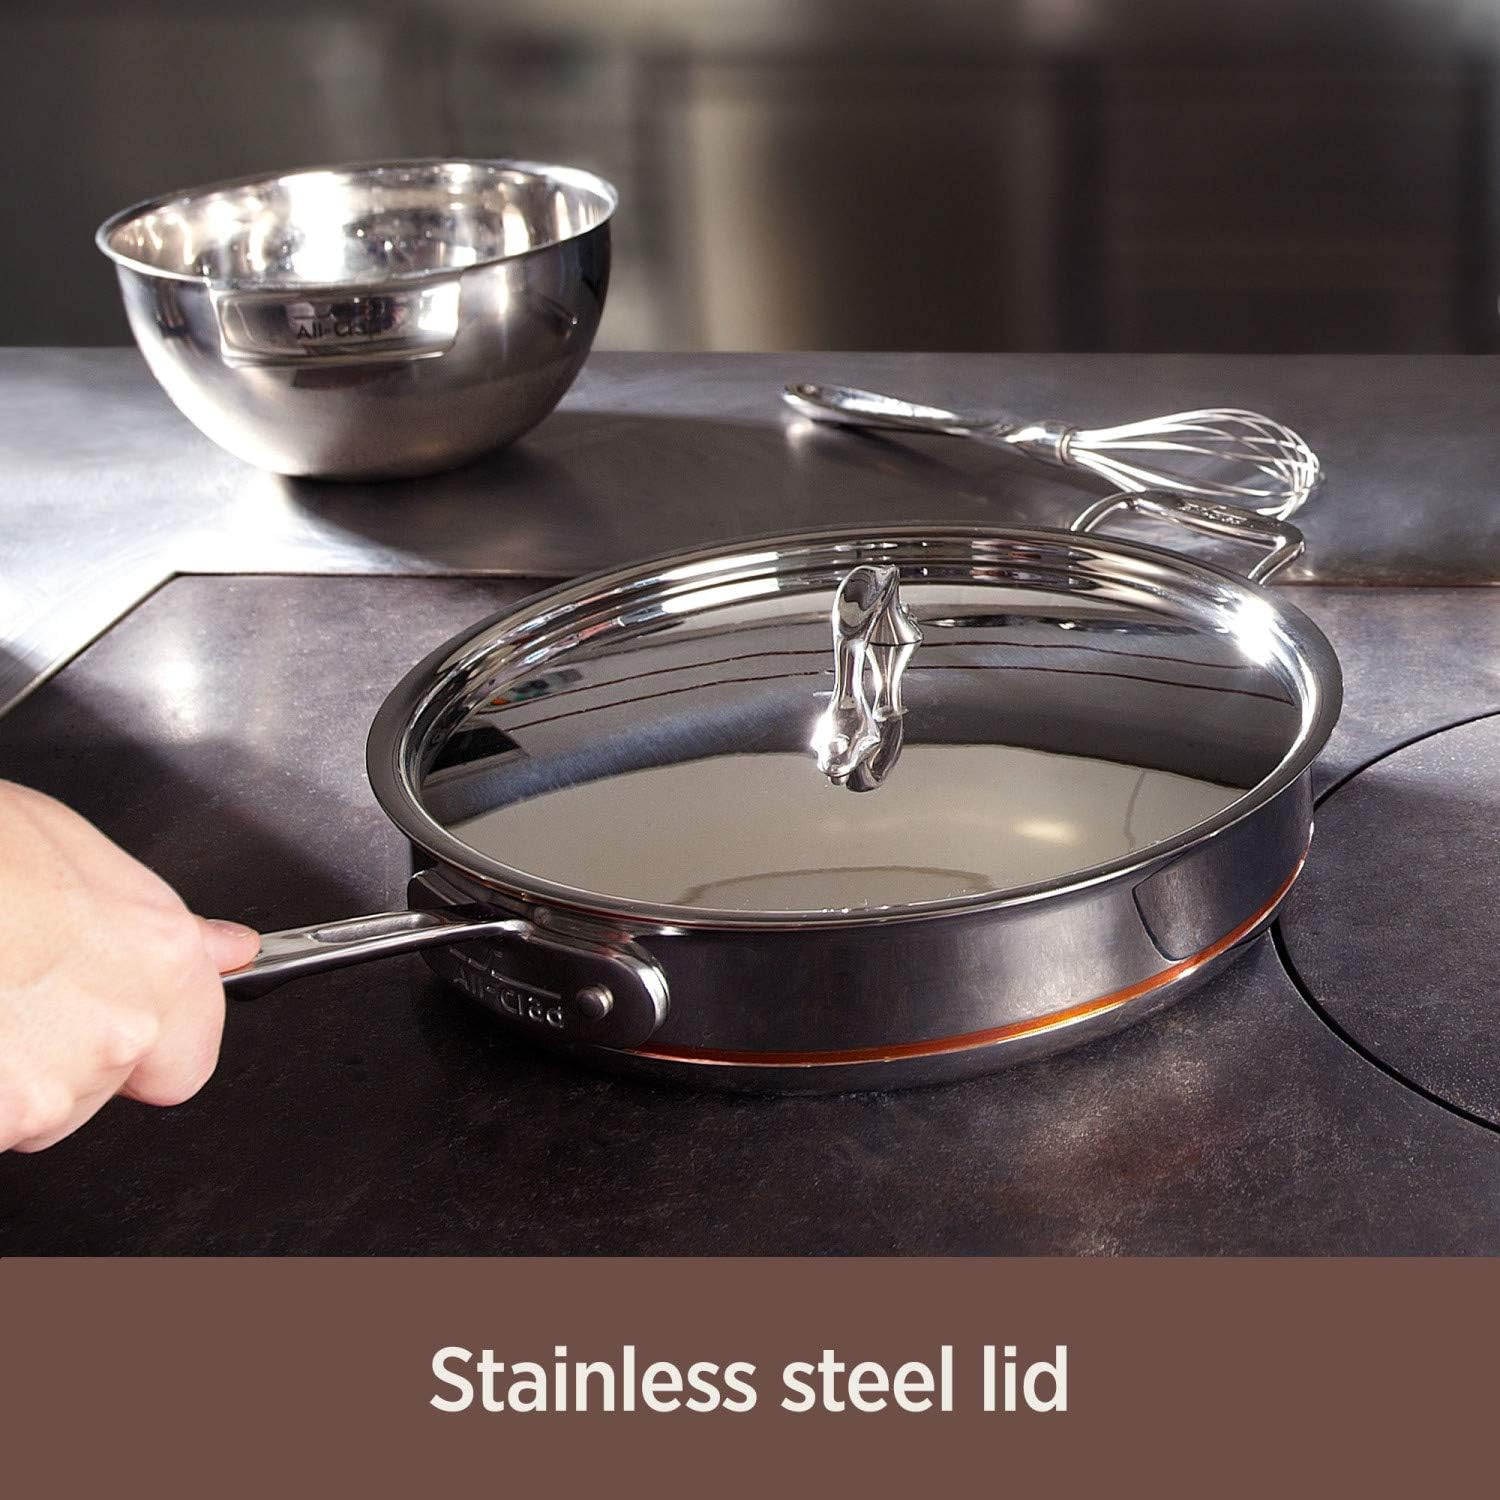  All-Clad Stainless Steel Saucepan Cookware, 3-Quart